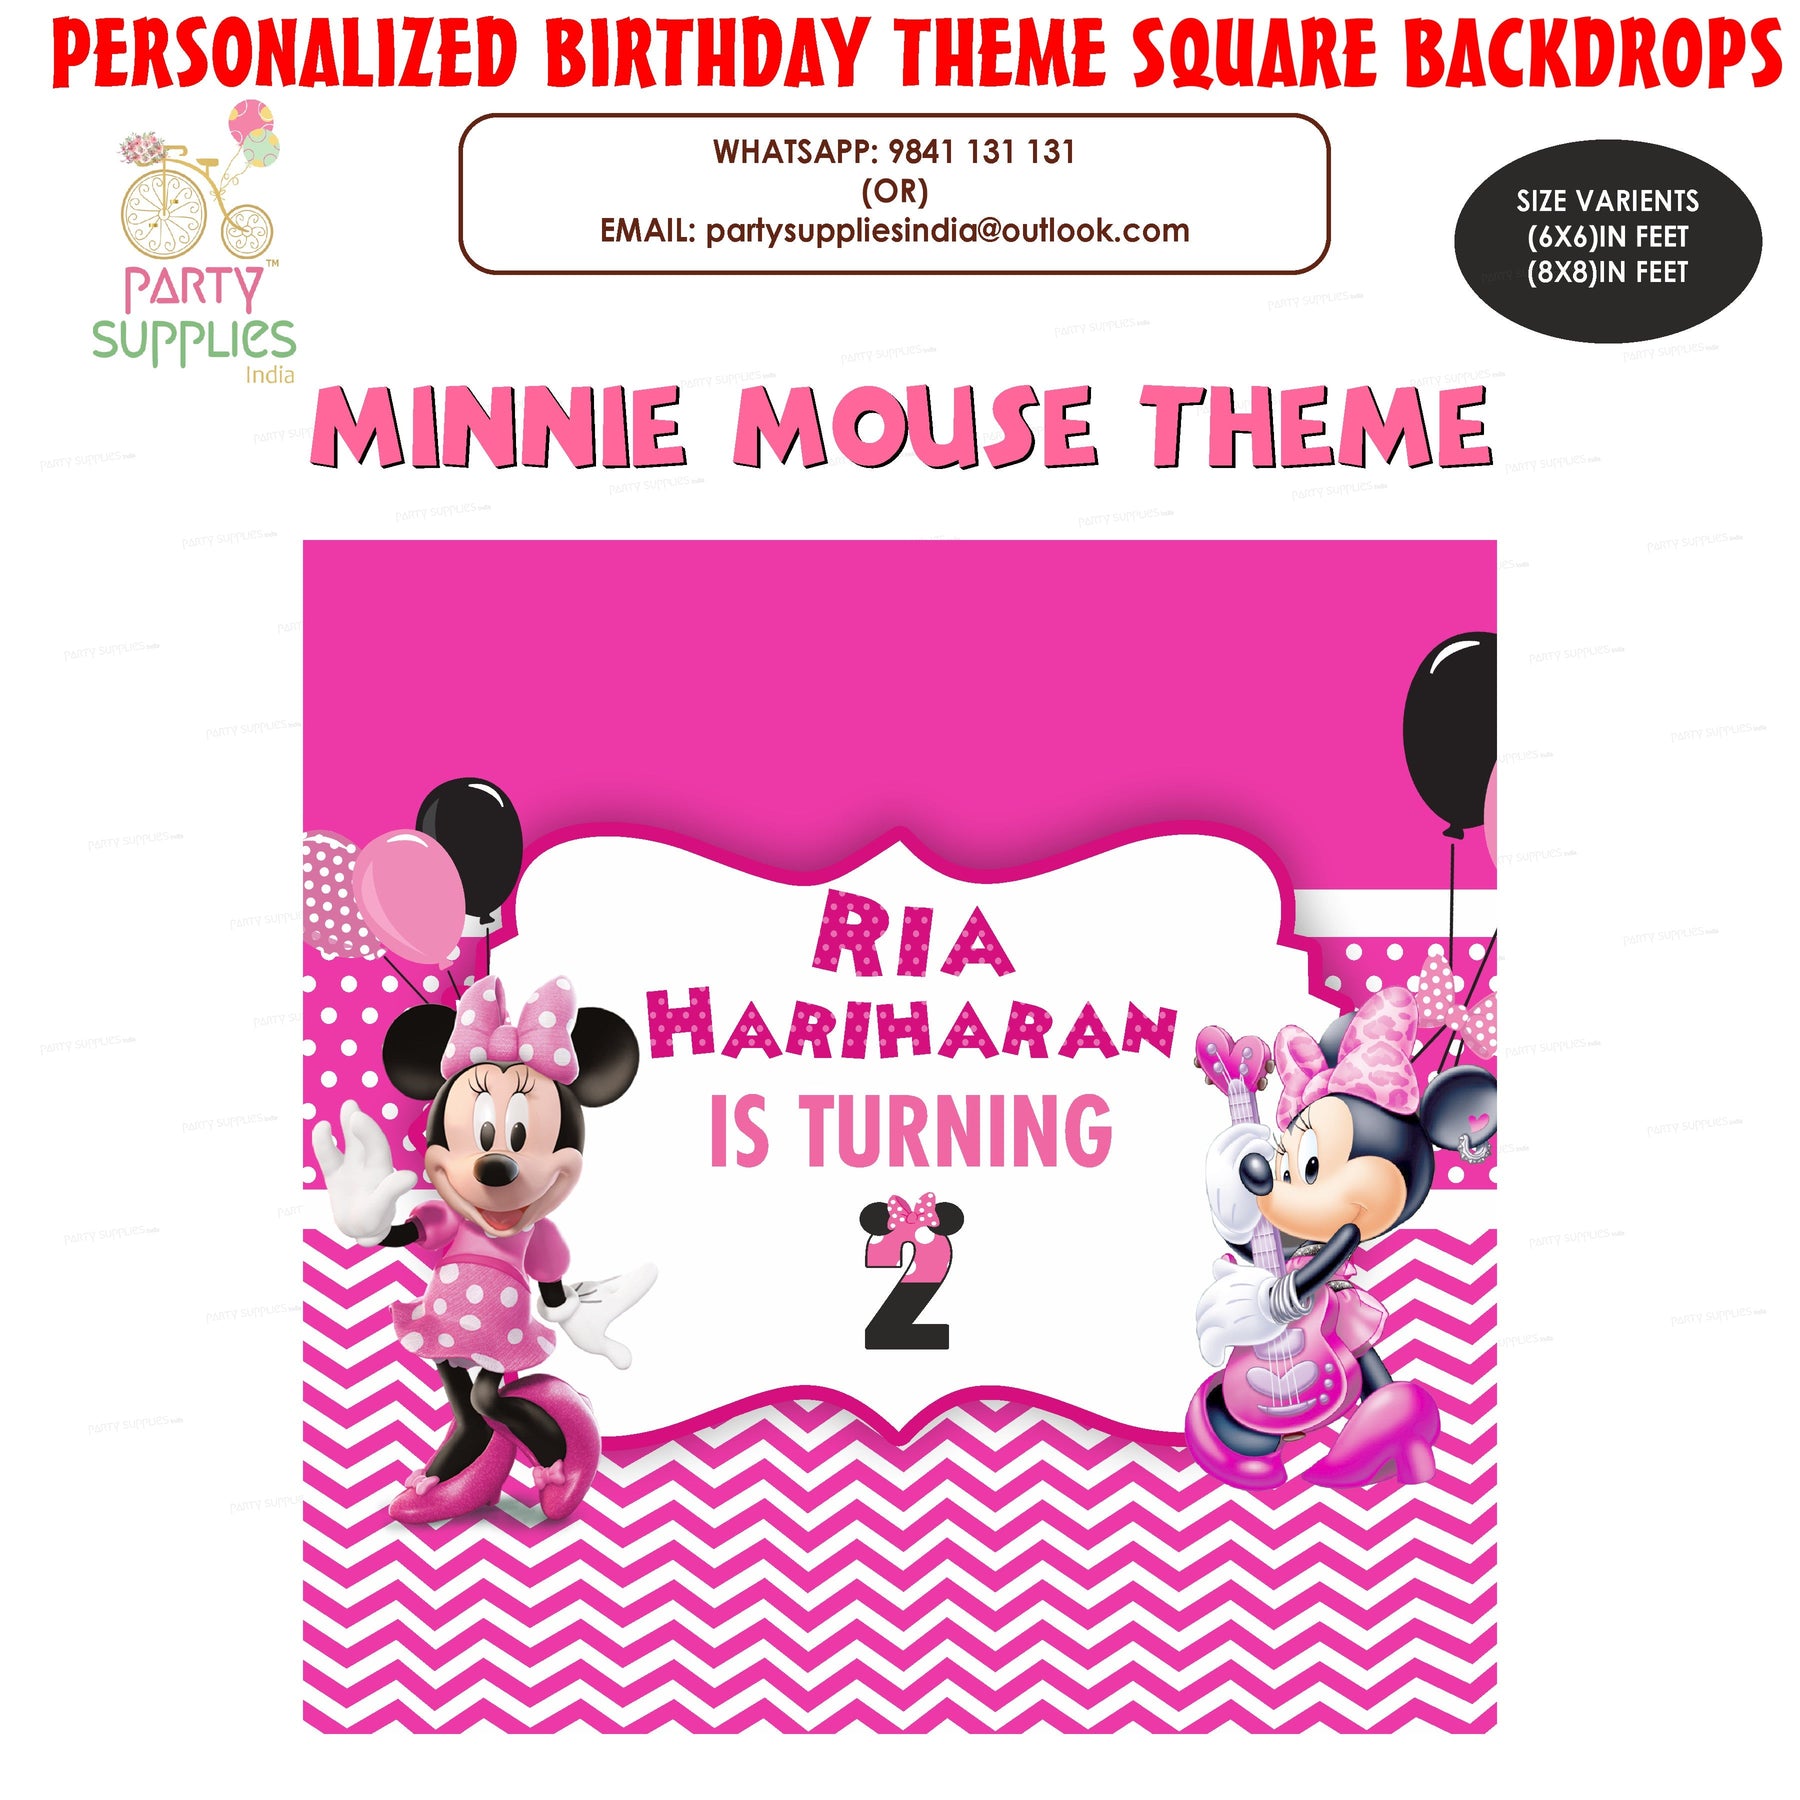 Minnie Mouse Theme Square Backdrop